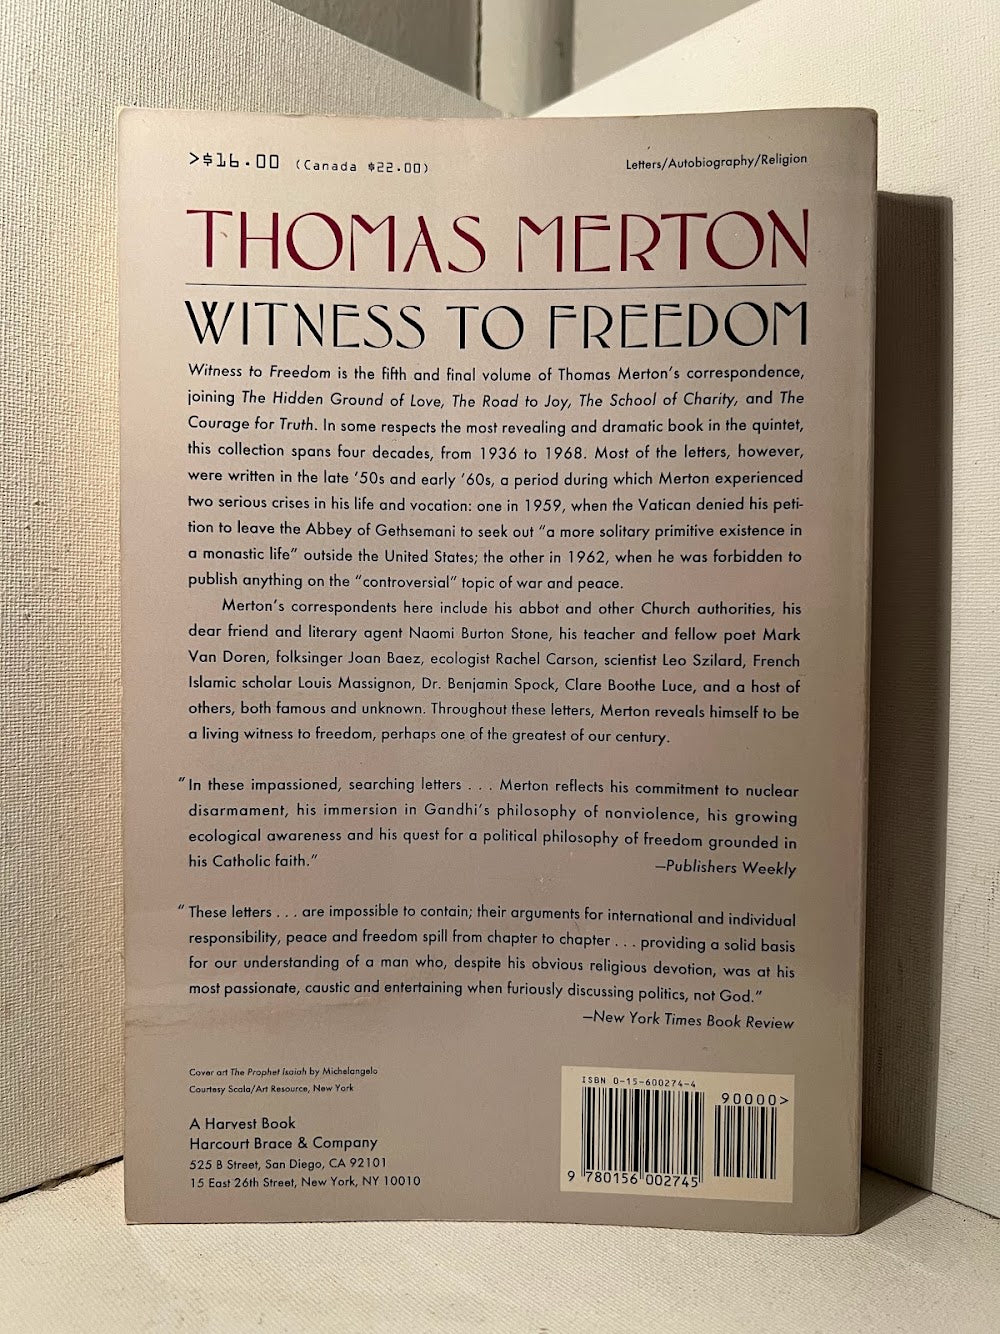 Witness to Freedom by Thomas Merton